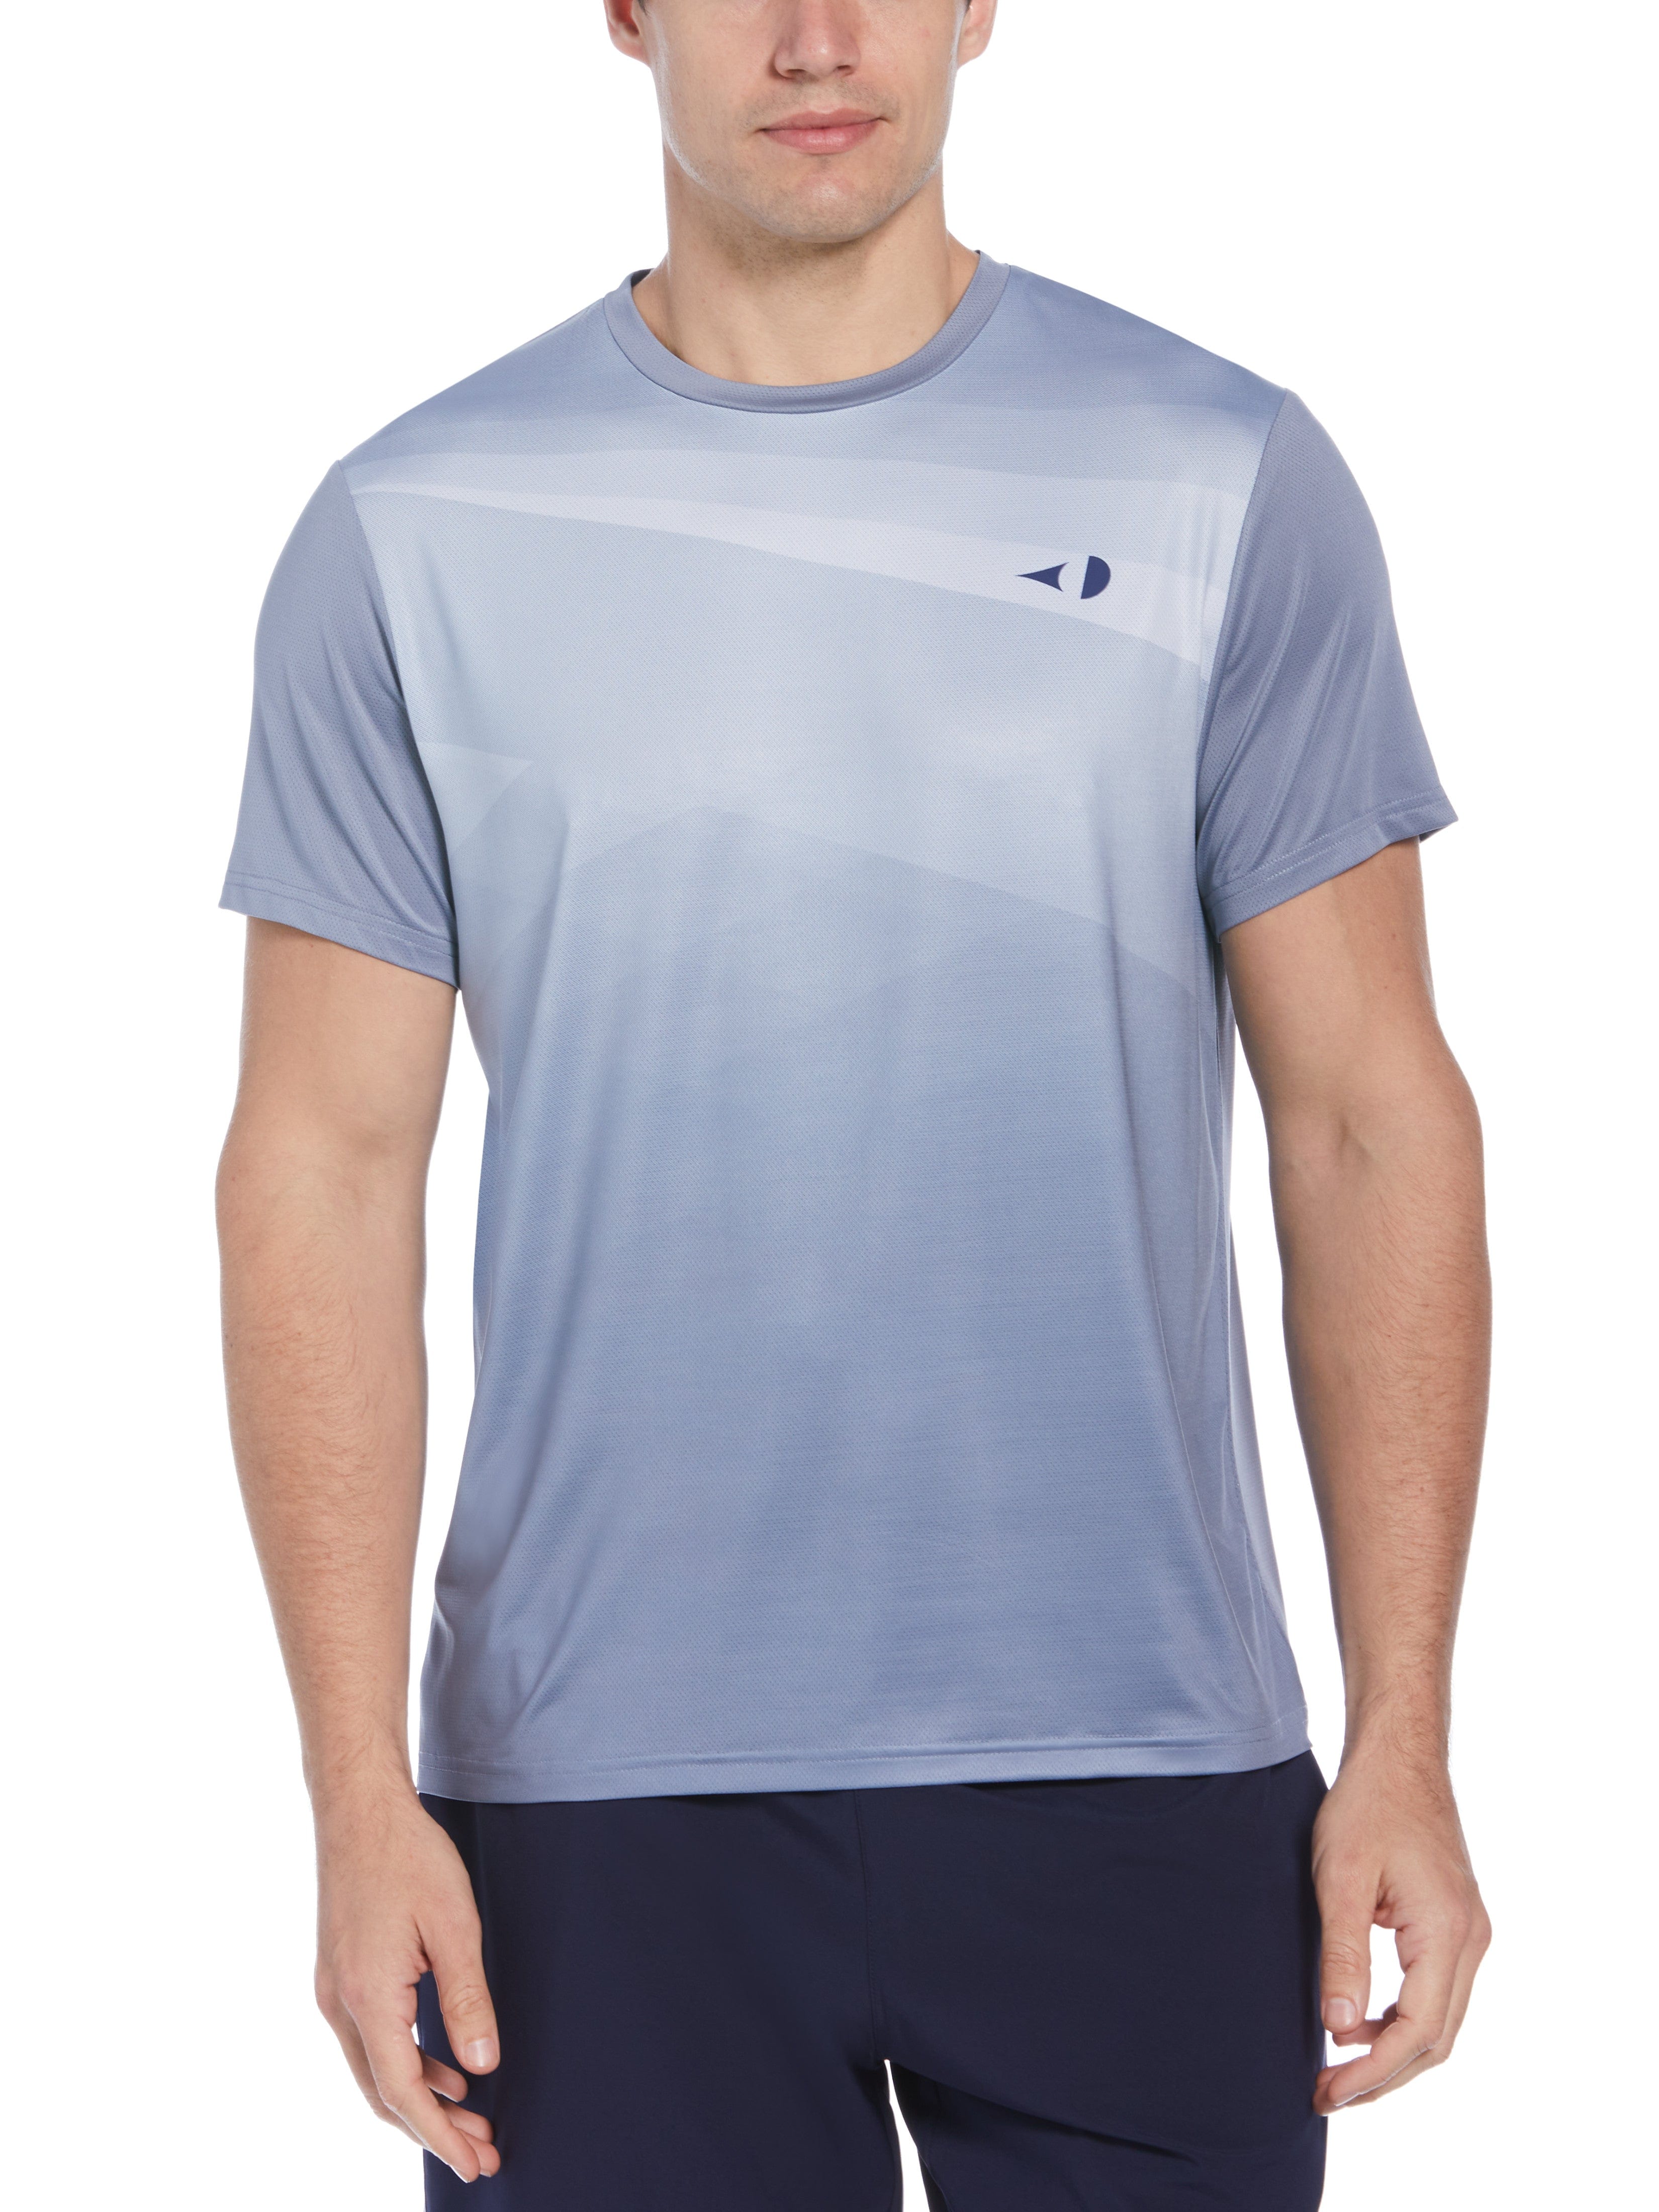 Grand Slam Mens Asymetrical Texture Printed Tennis T-Shirt, Size Medium, Flint Stone Gray, Polyester/Spandex | Golf Apparel Shop